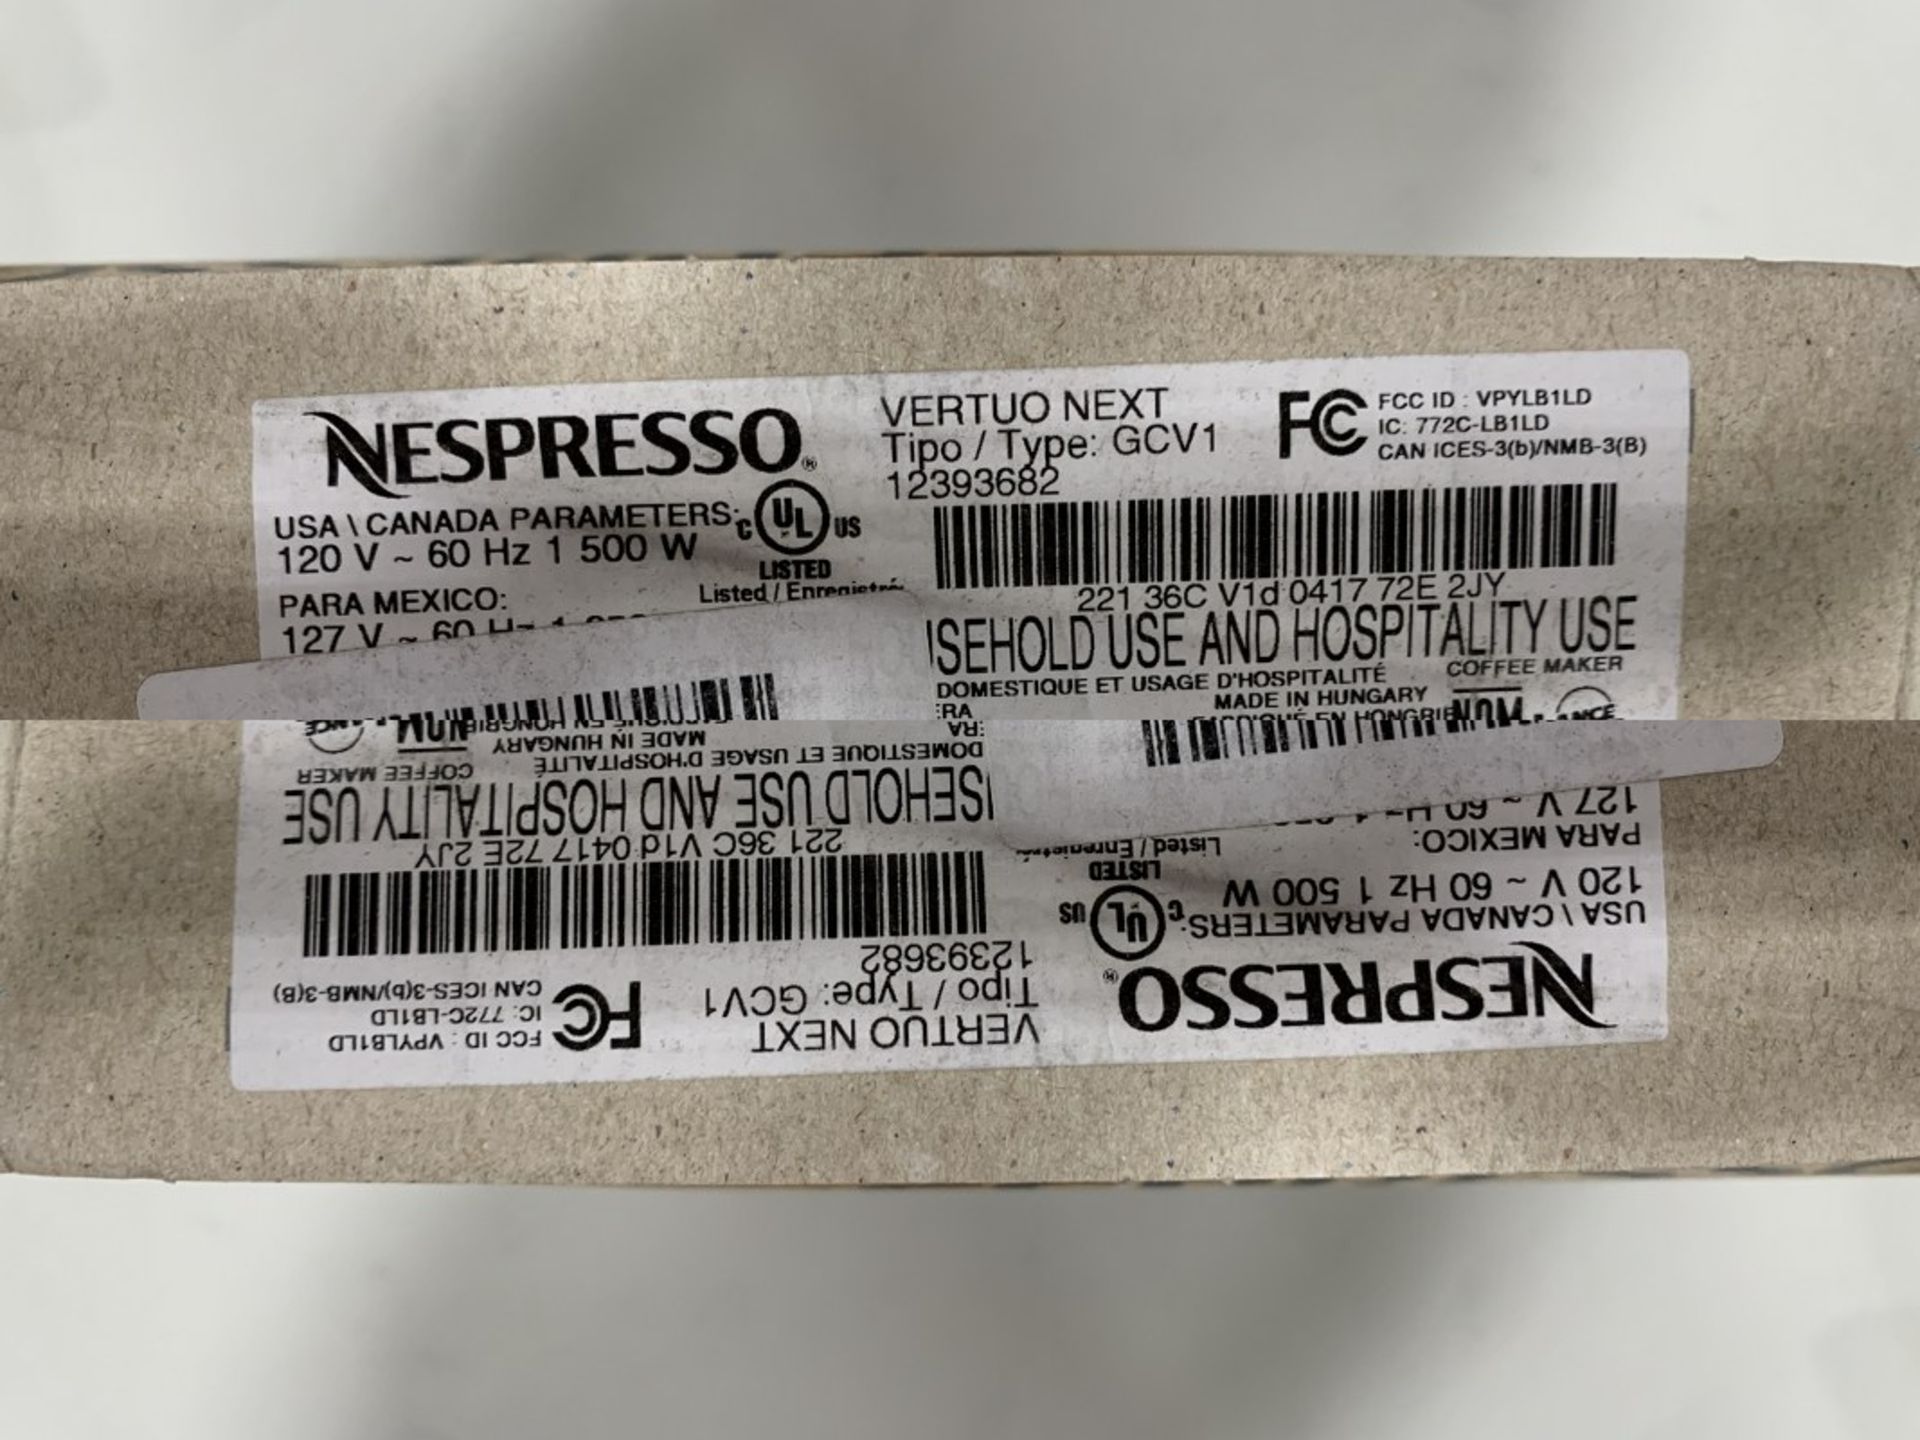 NESPRESSO - VERTUO NEXT COFFEE MACHINE - Image 3 of 3